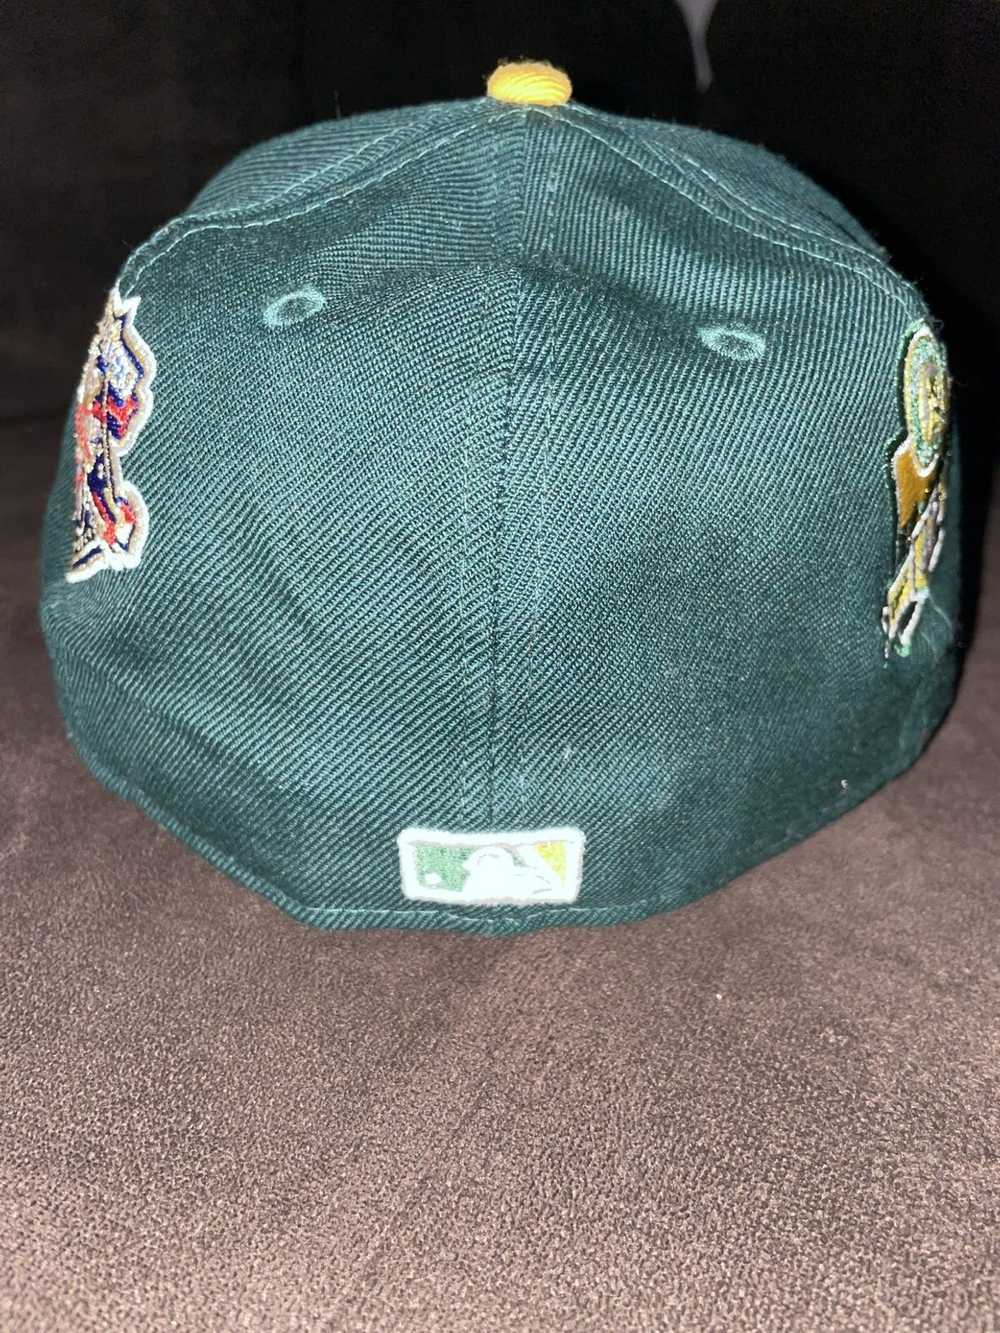 Oakland Oaks ABA Snap Back Hat Cap Green Yellow New Era 59Fifty Retro  Throwback